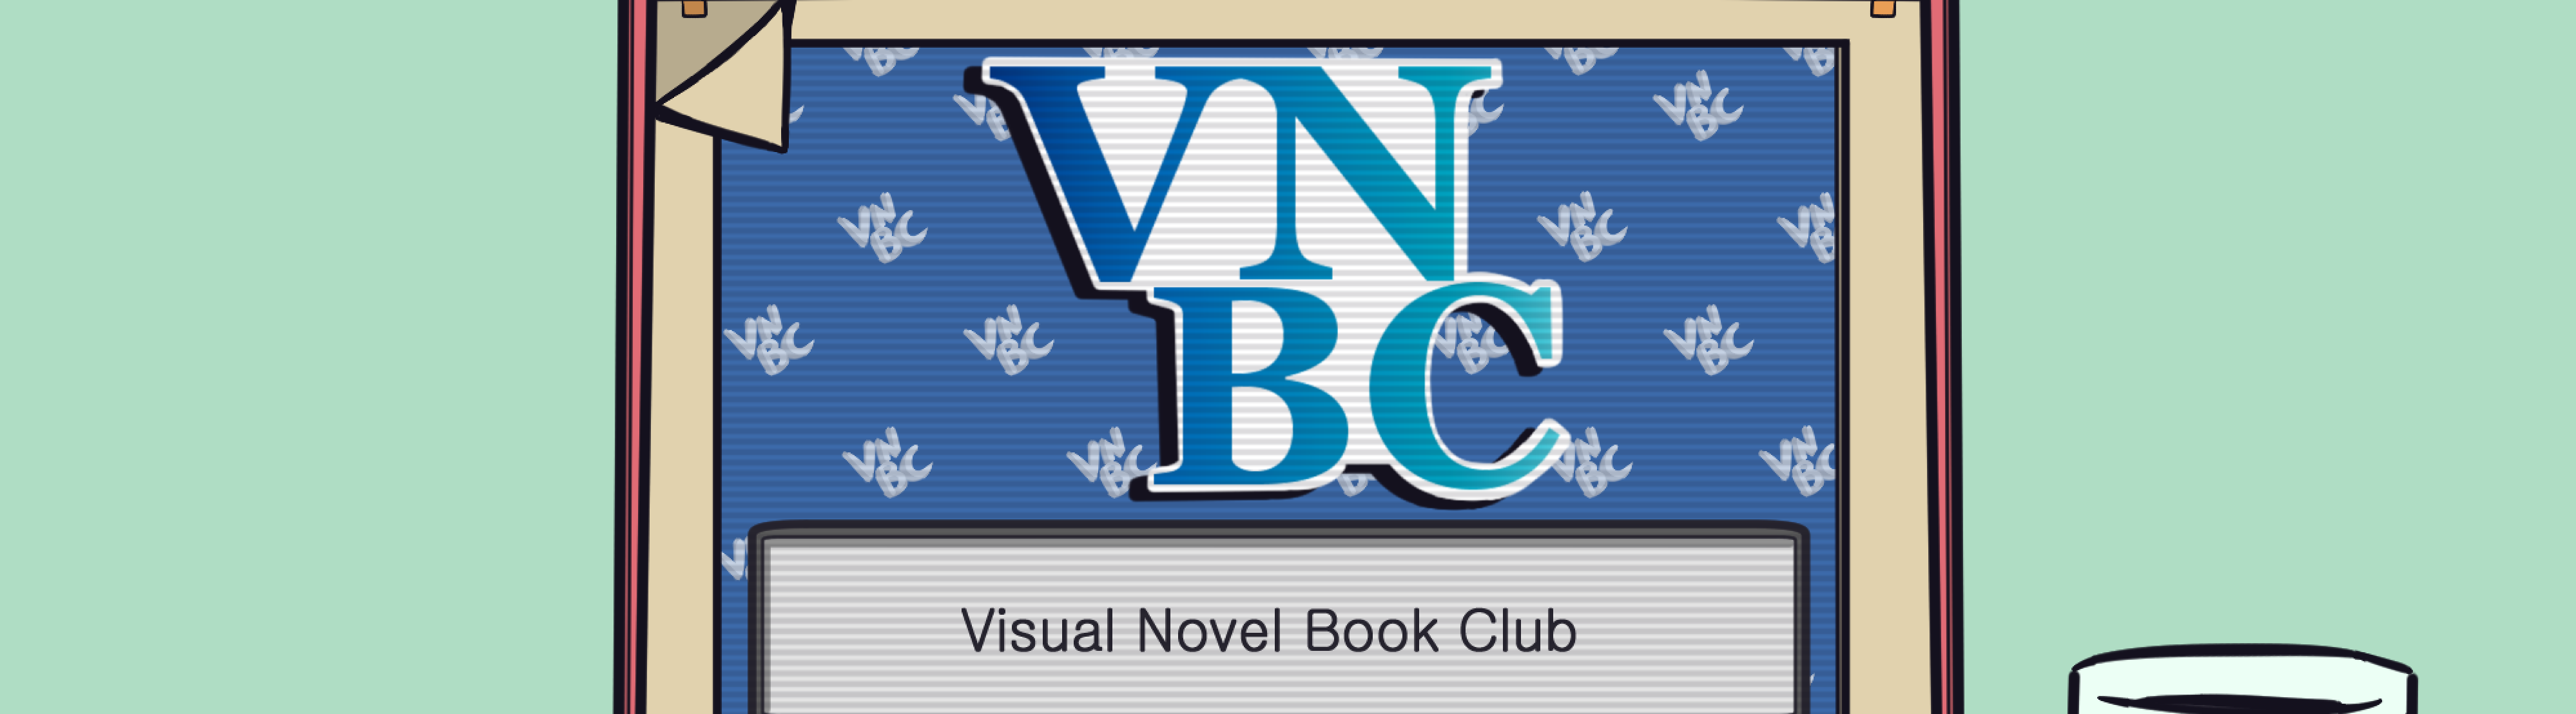 Visual Novel Book Club